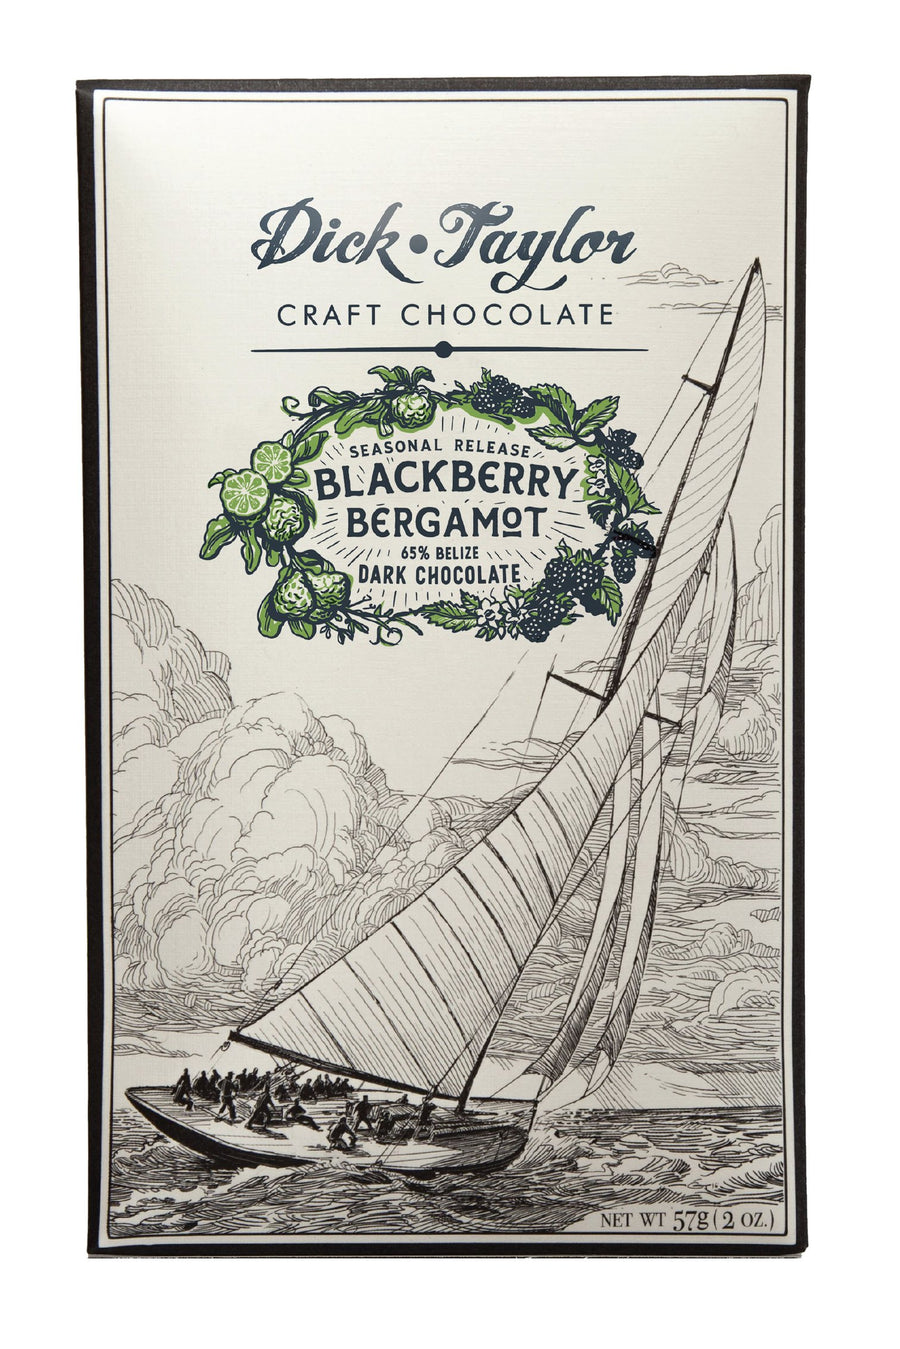 Dick Taylor 65 % Dark Chocolate with Blackberry & Bergamot